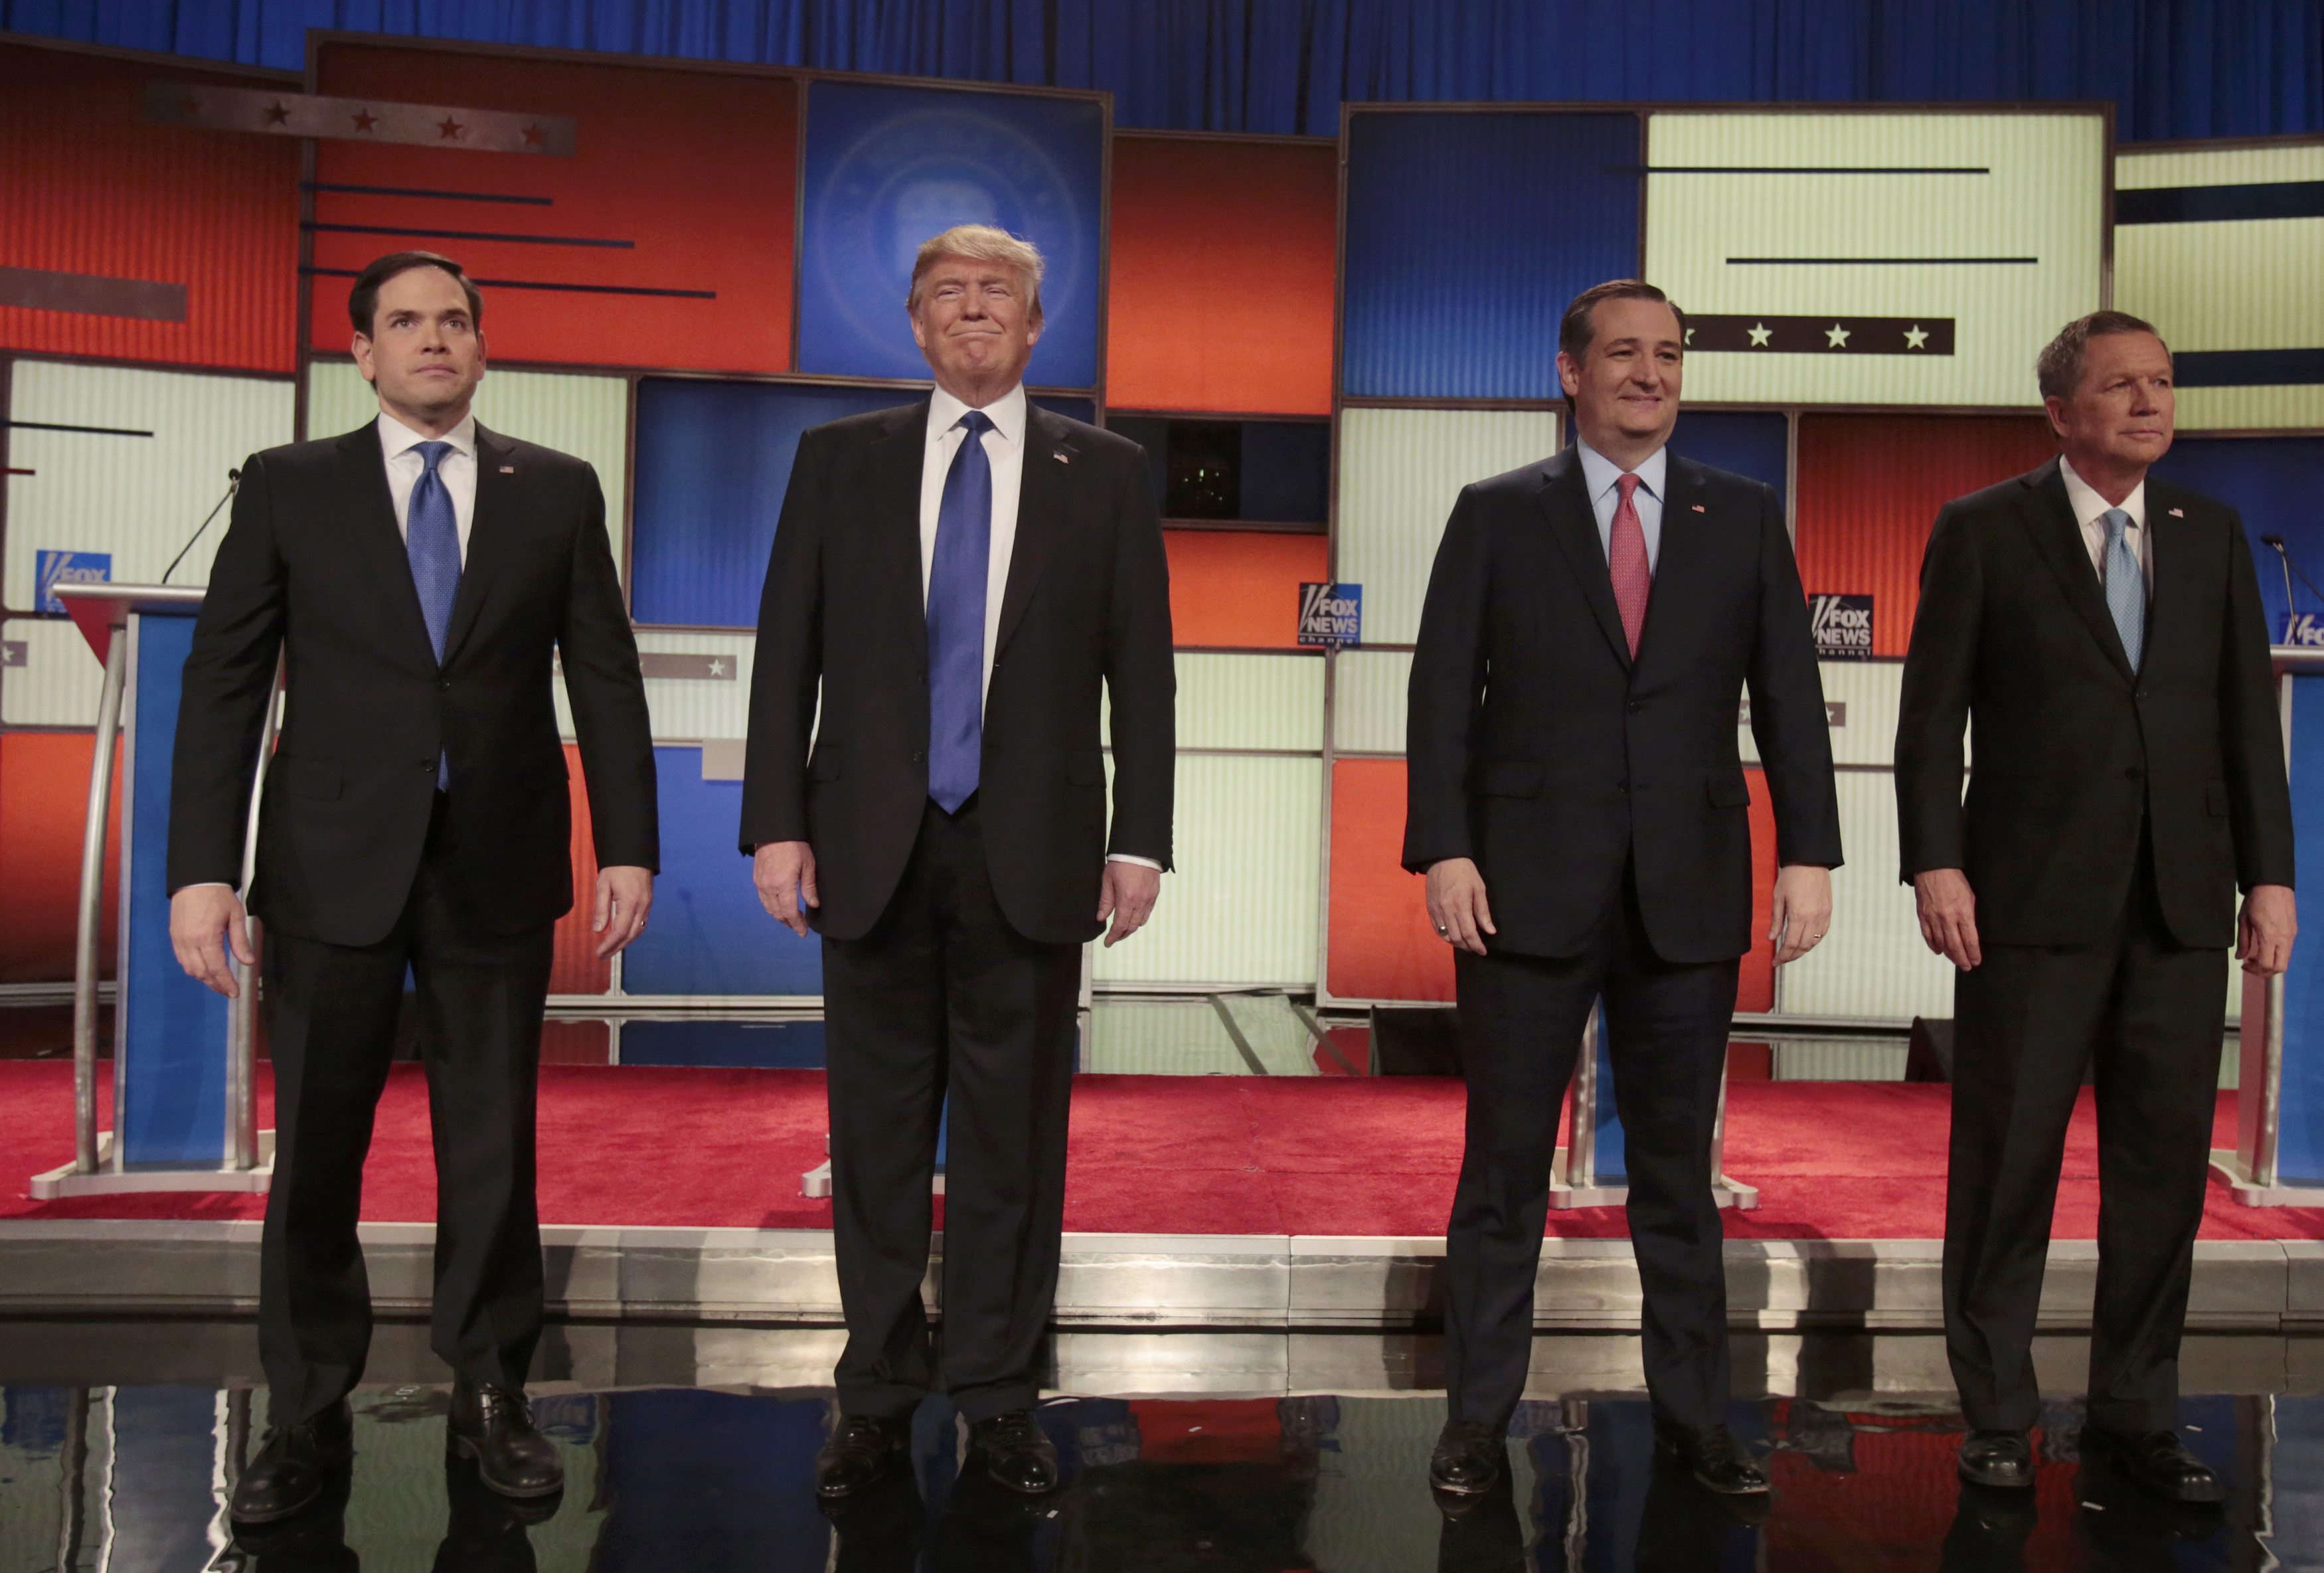 How to watch tonight's Republican debate CBS News